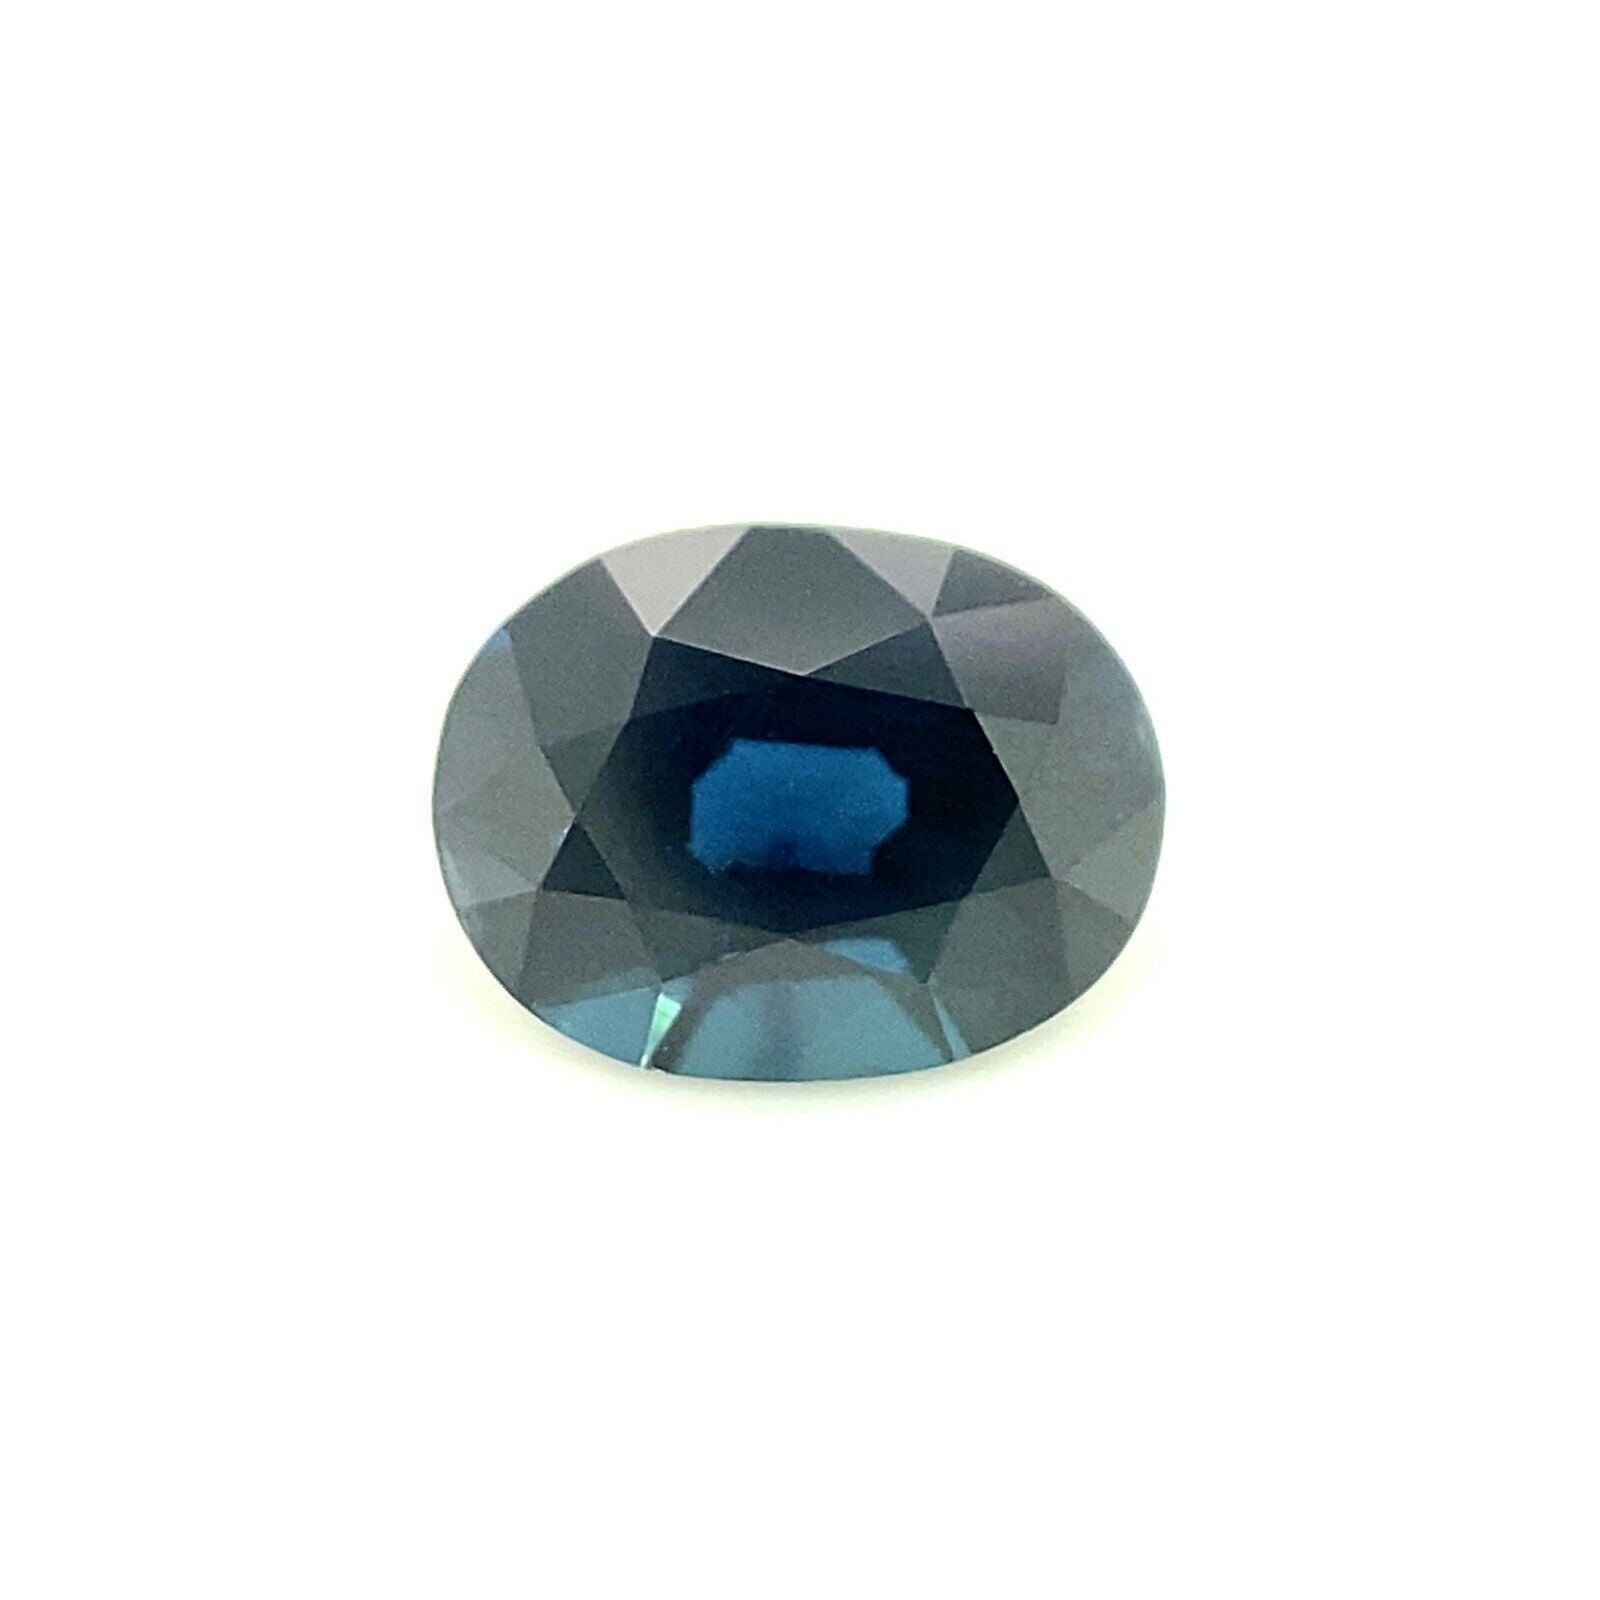 Fine pierre précieuse non sertie, saphir bleu australien taille ovale de 1,40 carat